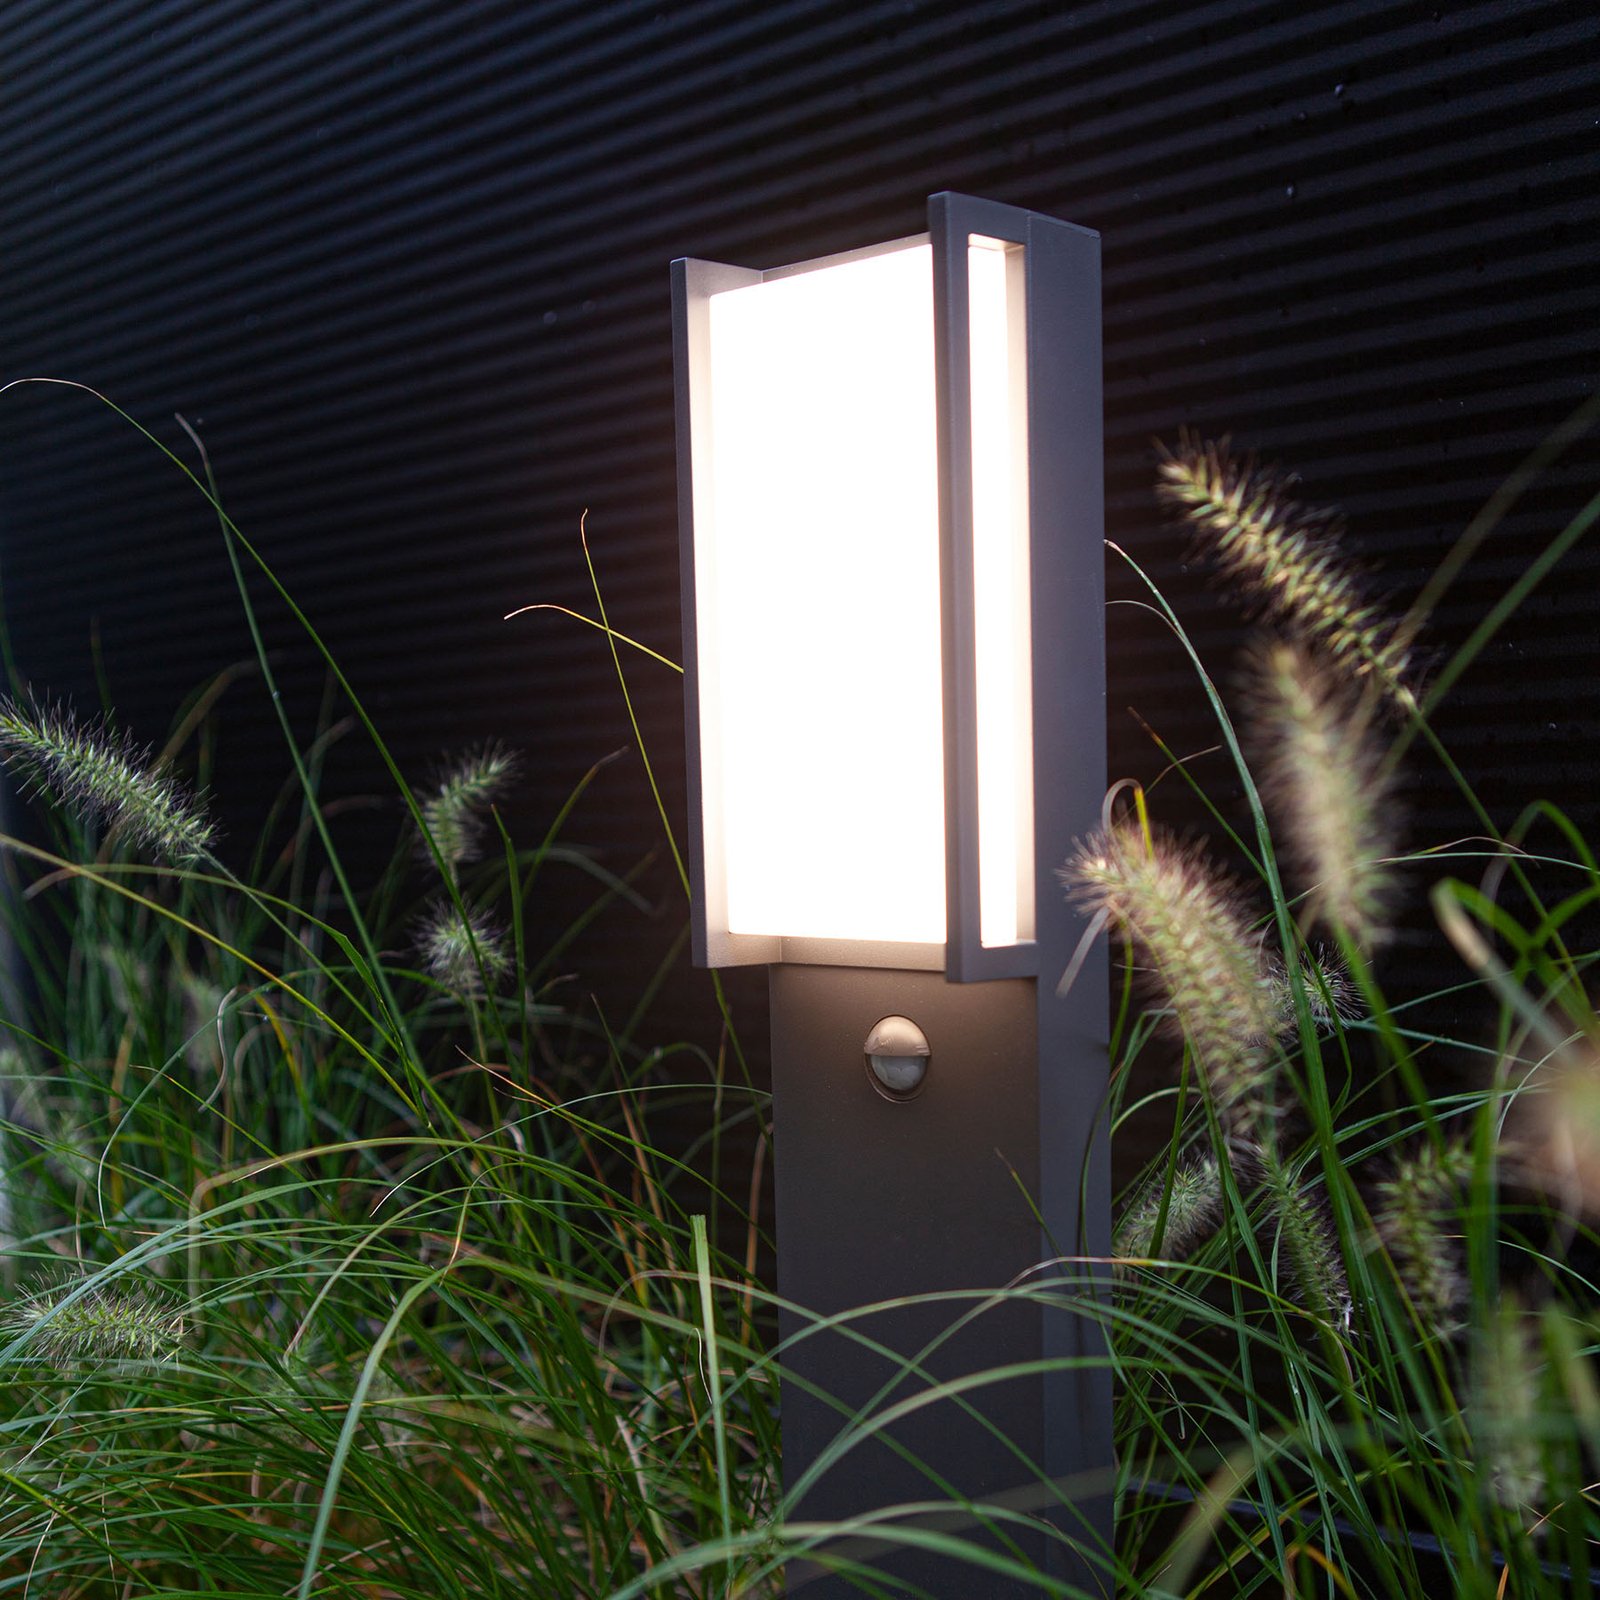 Qubo LED ösvény lámpa, antracit, mozgásérzékelővel